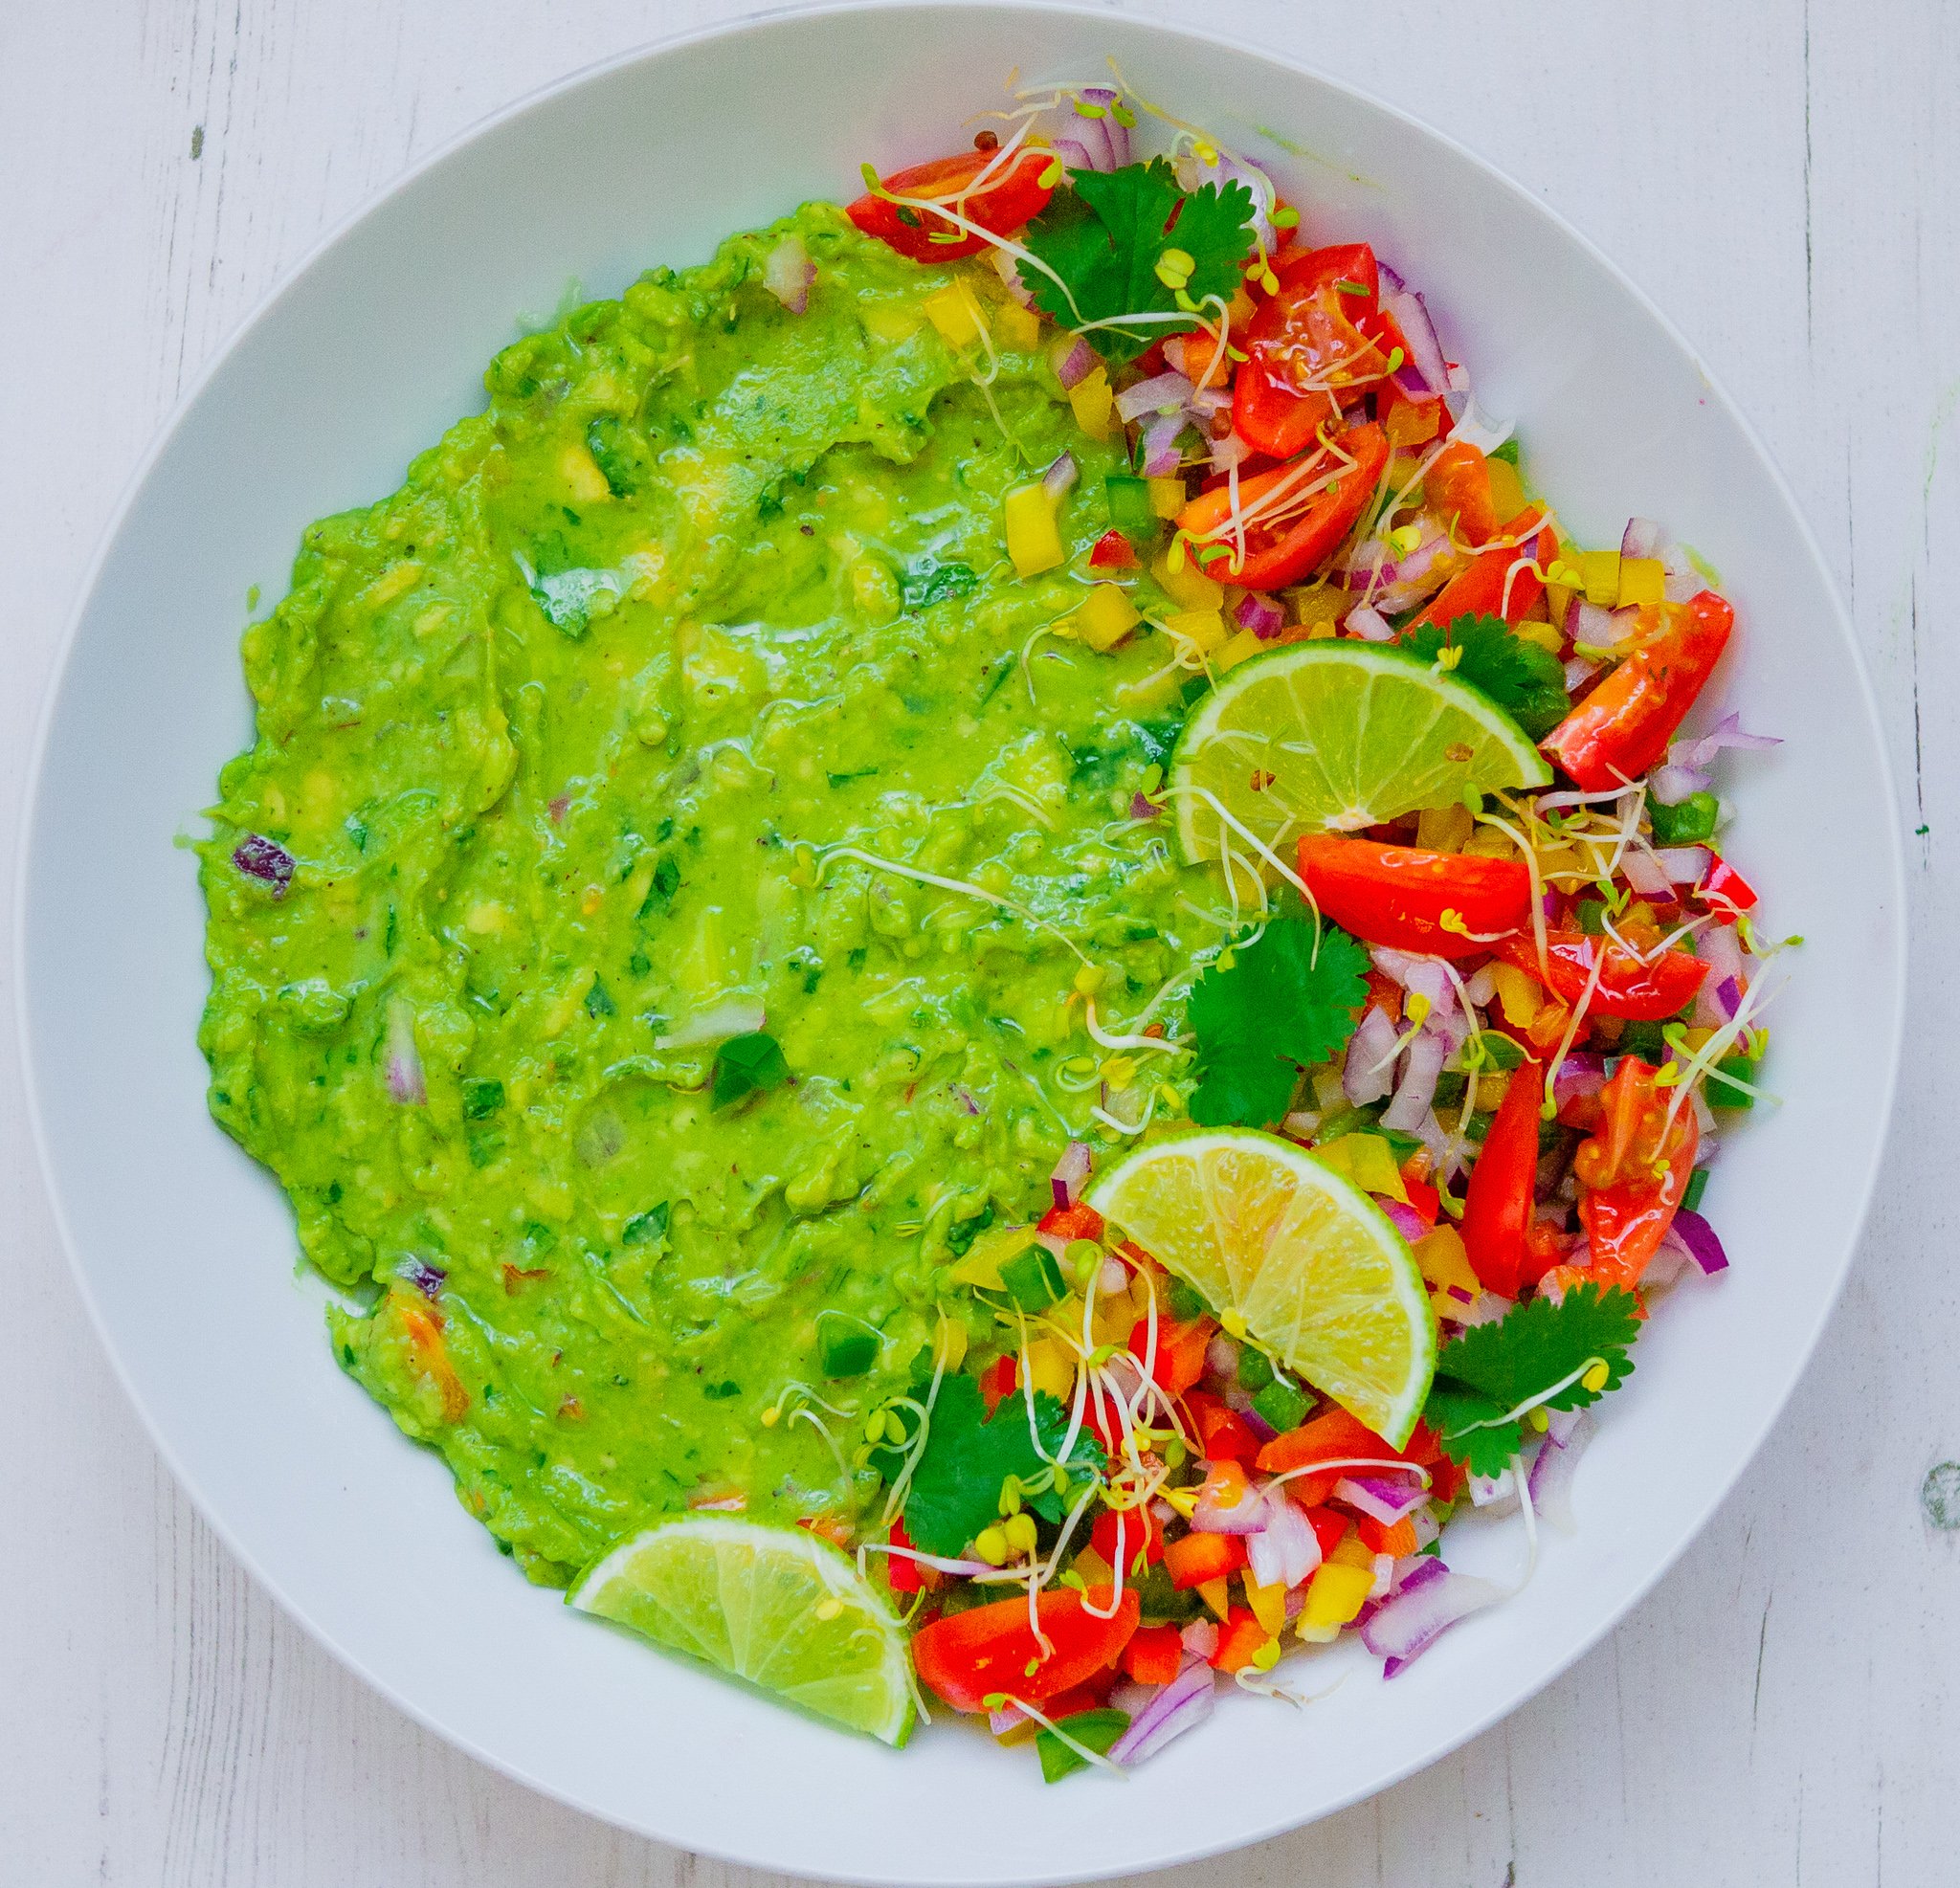 quick guacamole recipe by kam sokhi allergy chef 